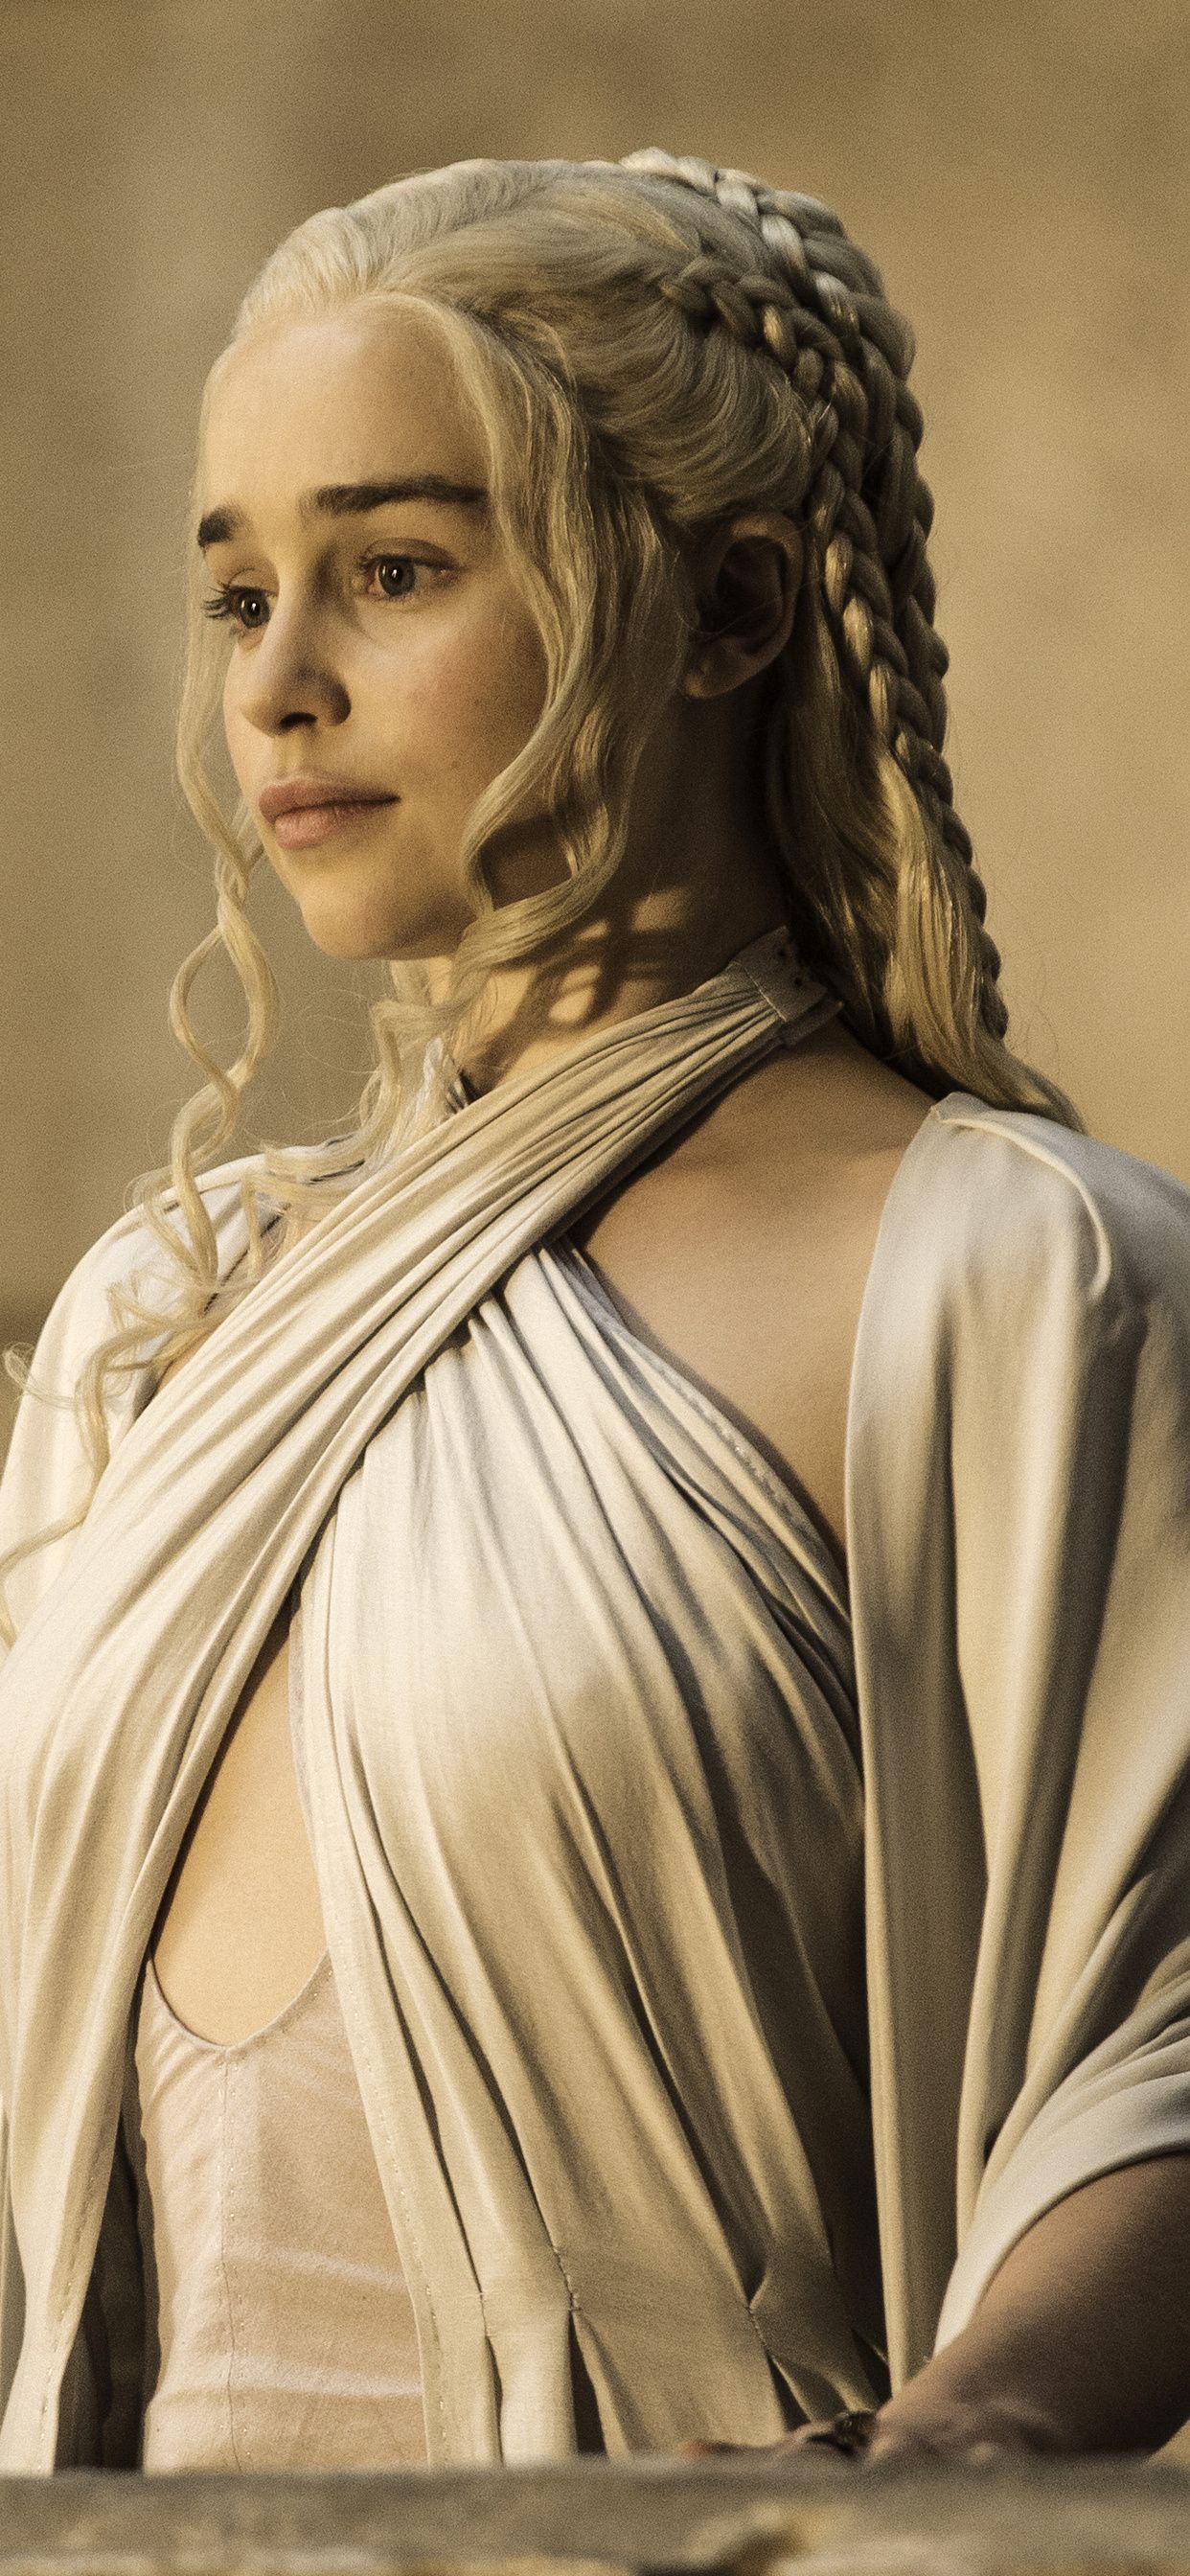 4k Daenerys Targaryen iPhone XS MAX HD 4k Wallpaper, Image, Background, Photo and Picture